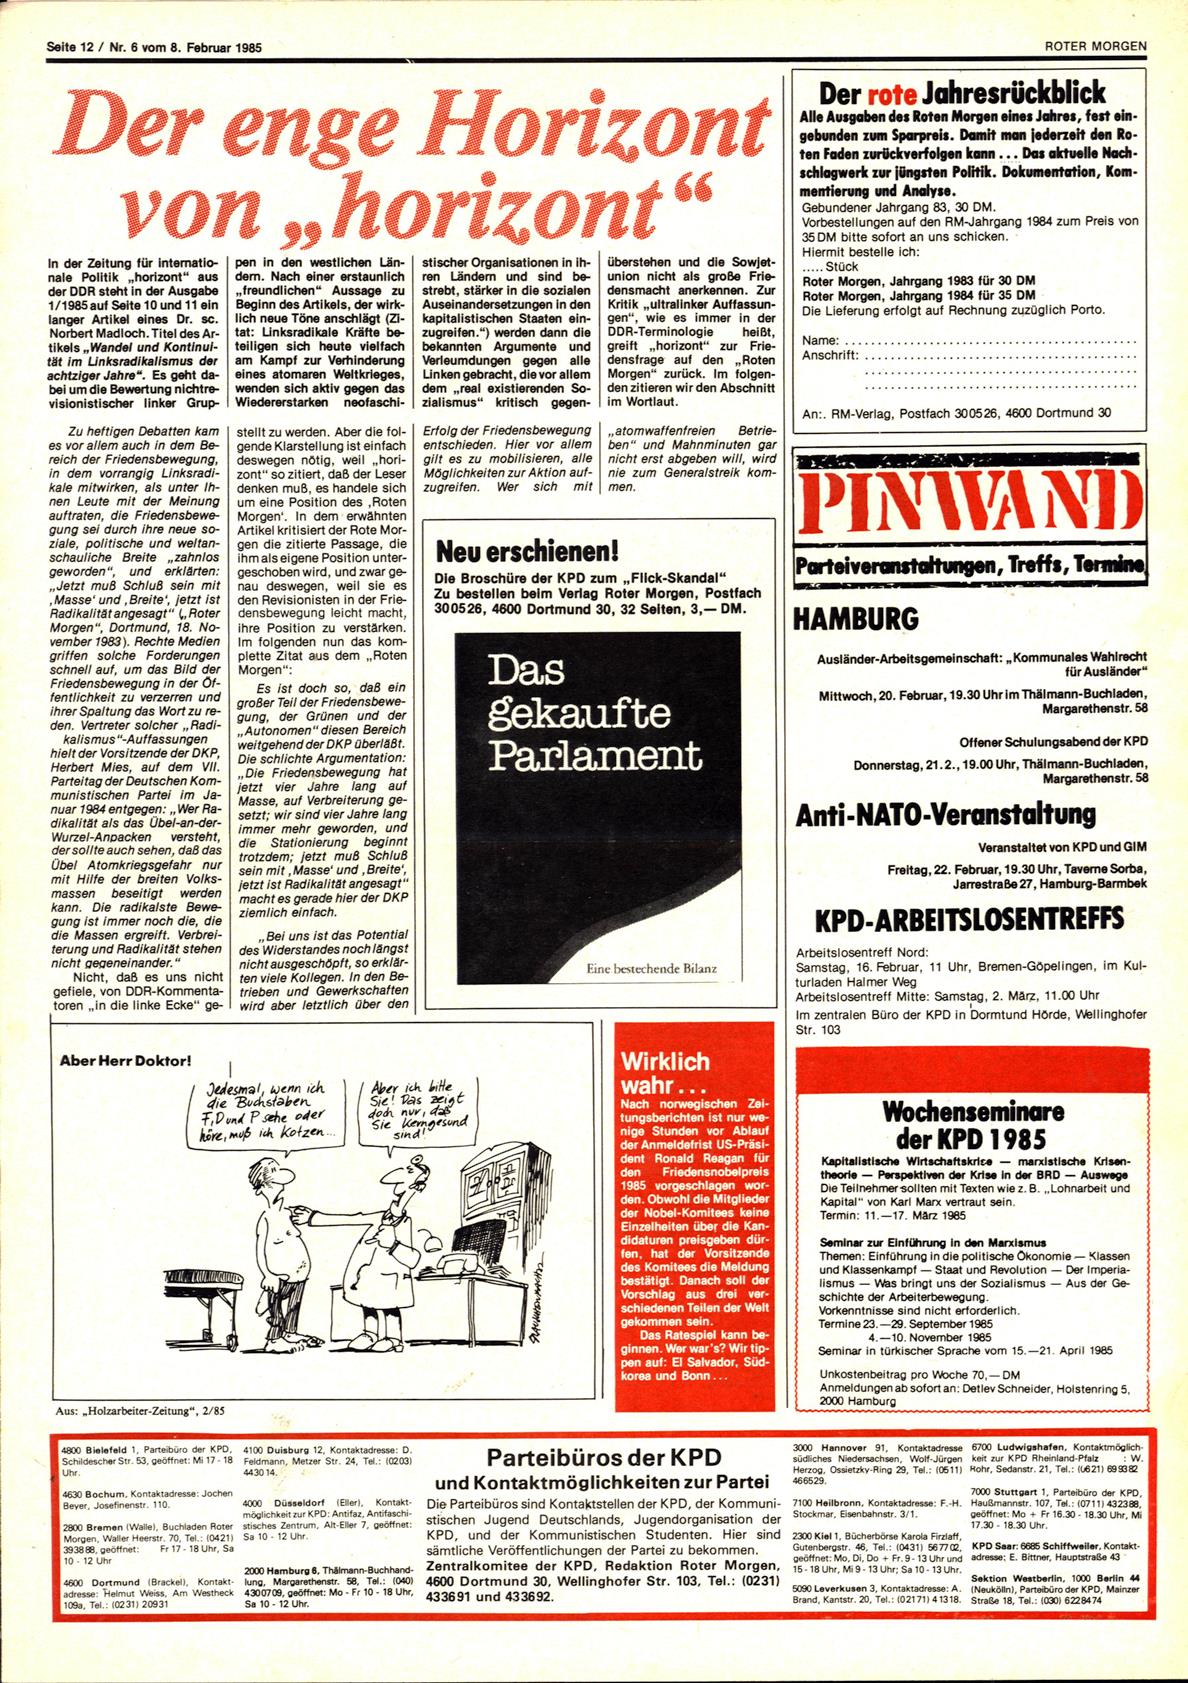 Roter Morgen, 19. Jg., 8. Februar 1985, Nr. 6, Seite 12